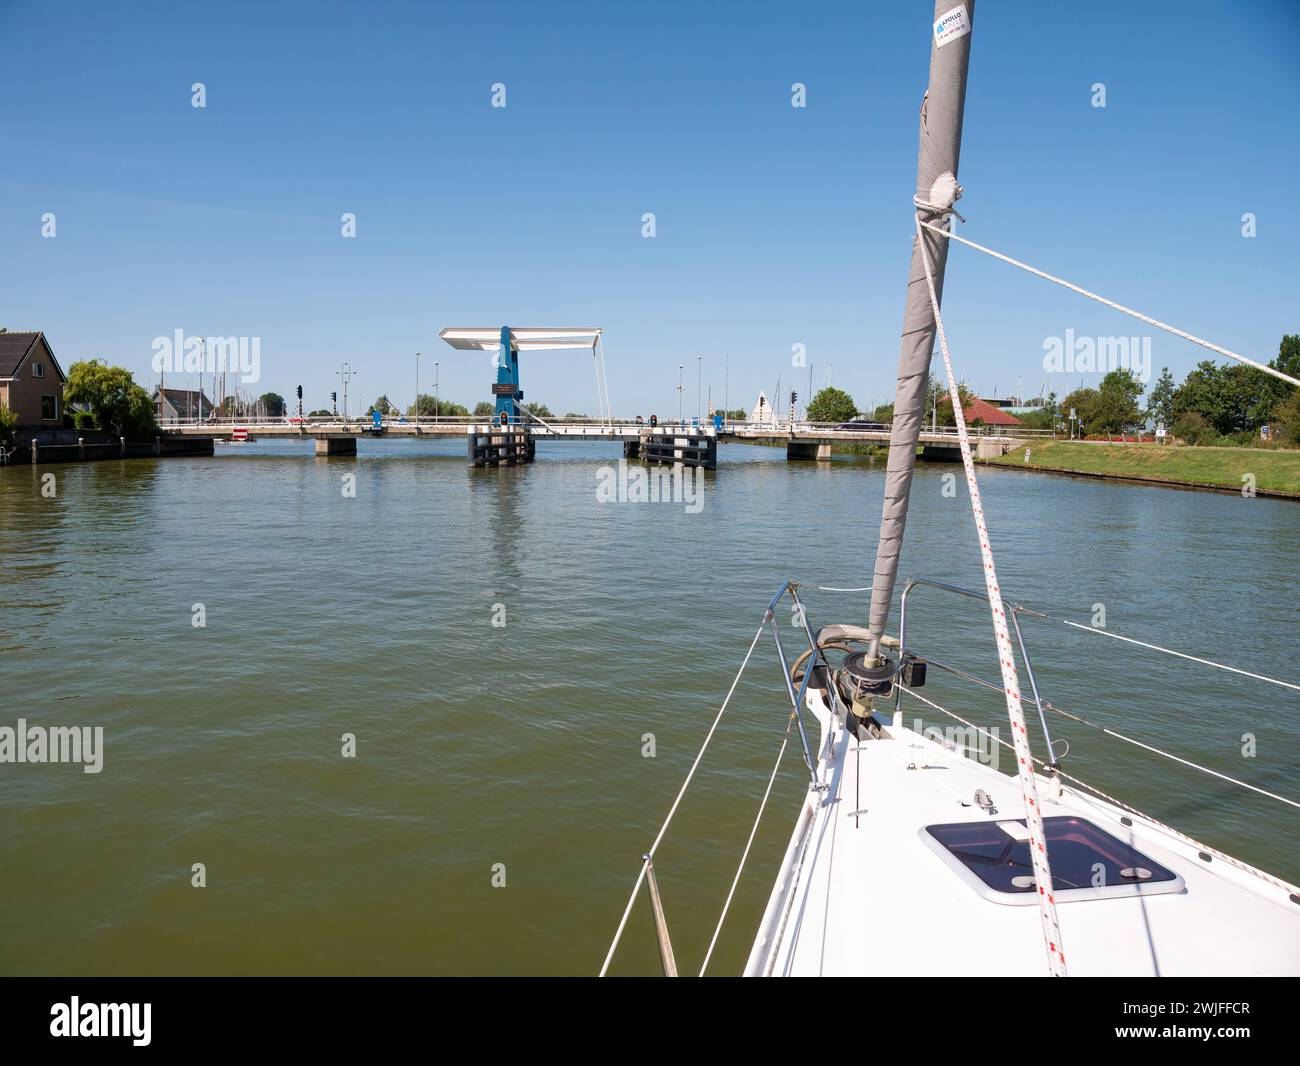 Barca a vela in avvicinamento al ponte in attesa di apertura - 1/4, Warnsebrug sul canale Johan Frisokanaal in Frisia, Paesi Bassi Foto Stock